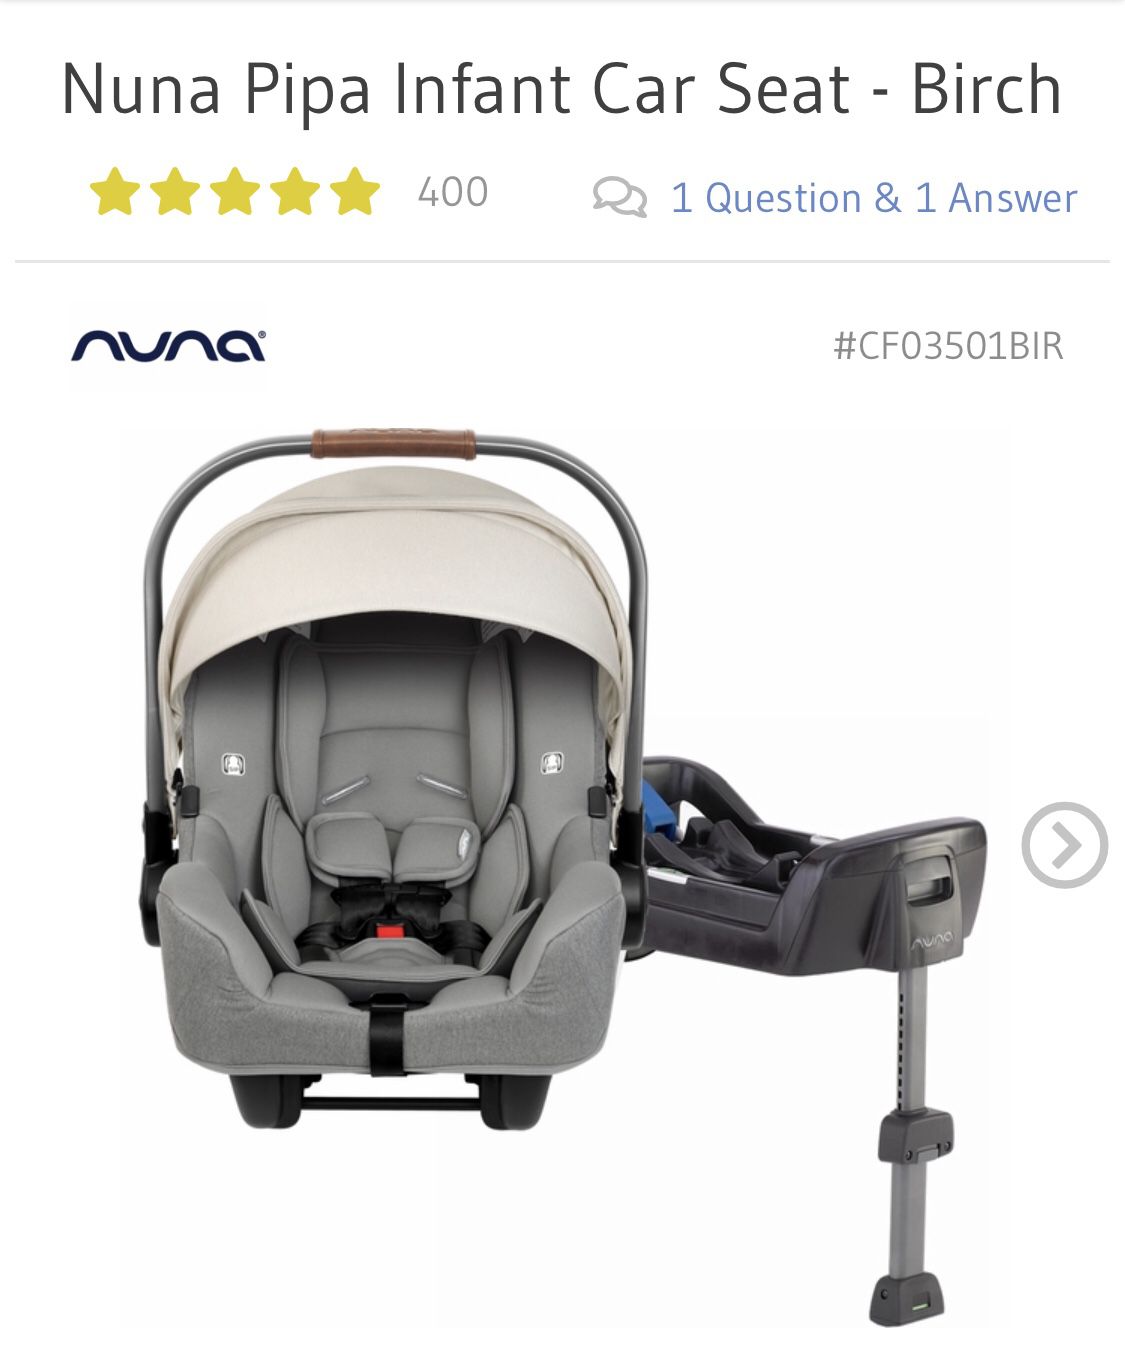 Nuna Pipa Infant Car Seat - Birch (latest model)